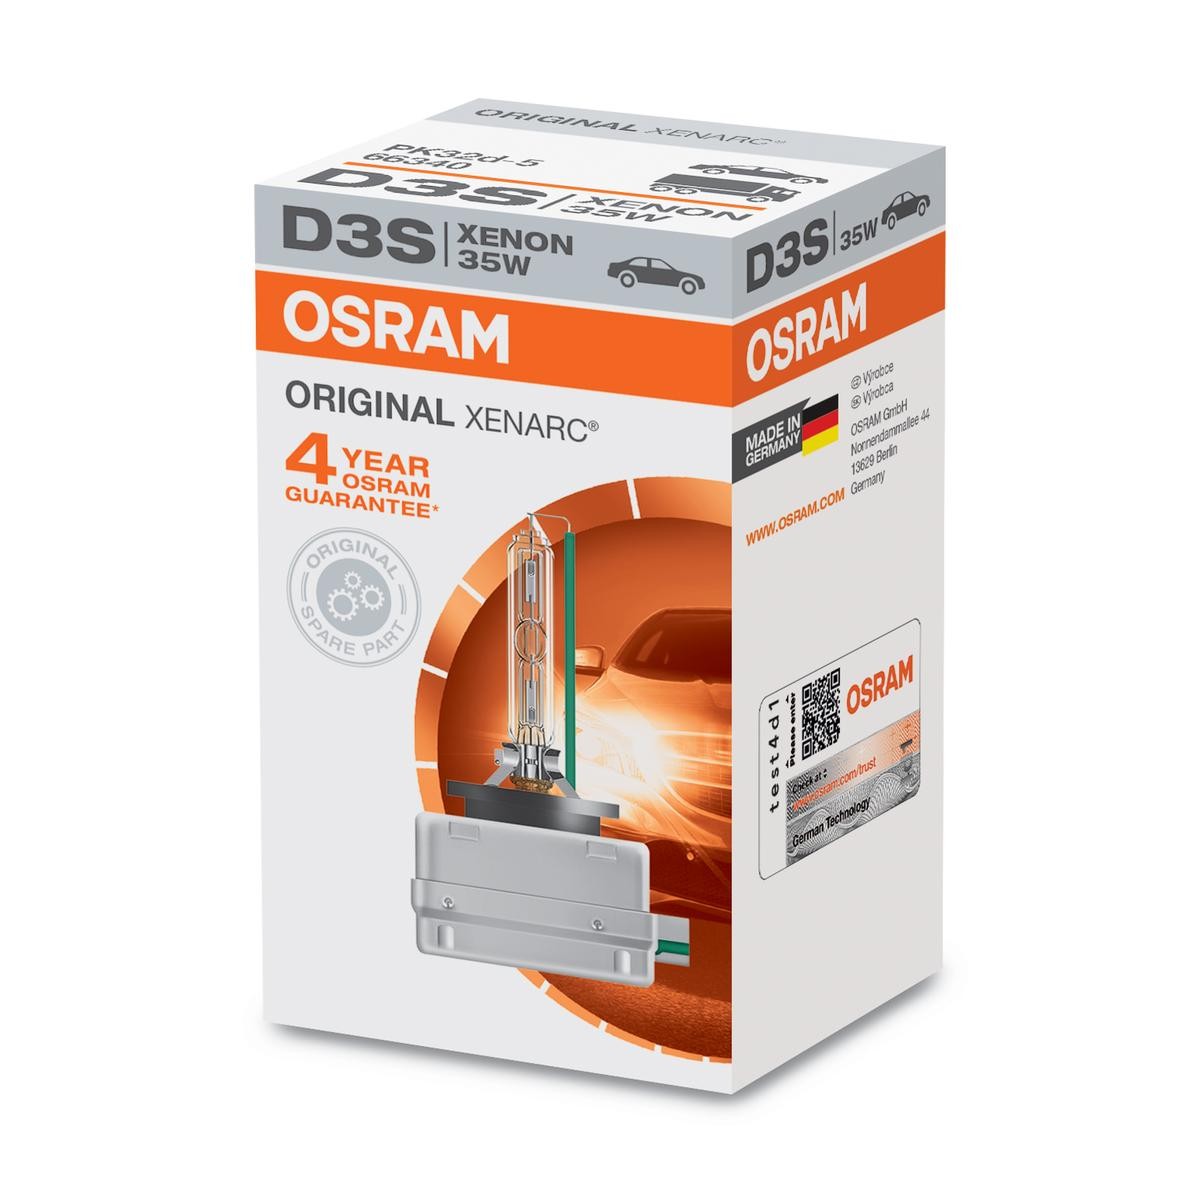 OSRAM 66340 Passat B7 Variant 2014 Autolampen D3S (Gasentladungslampe) 42V 35W4100K Xenon